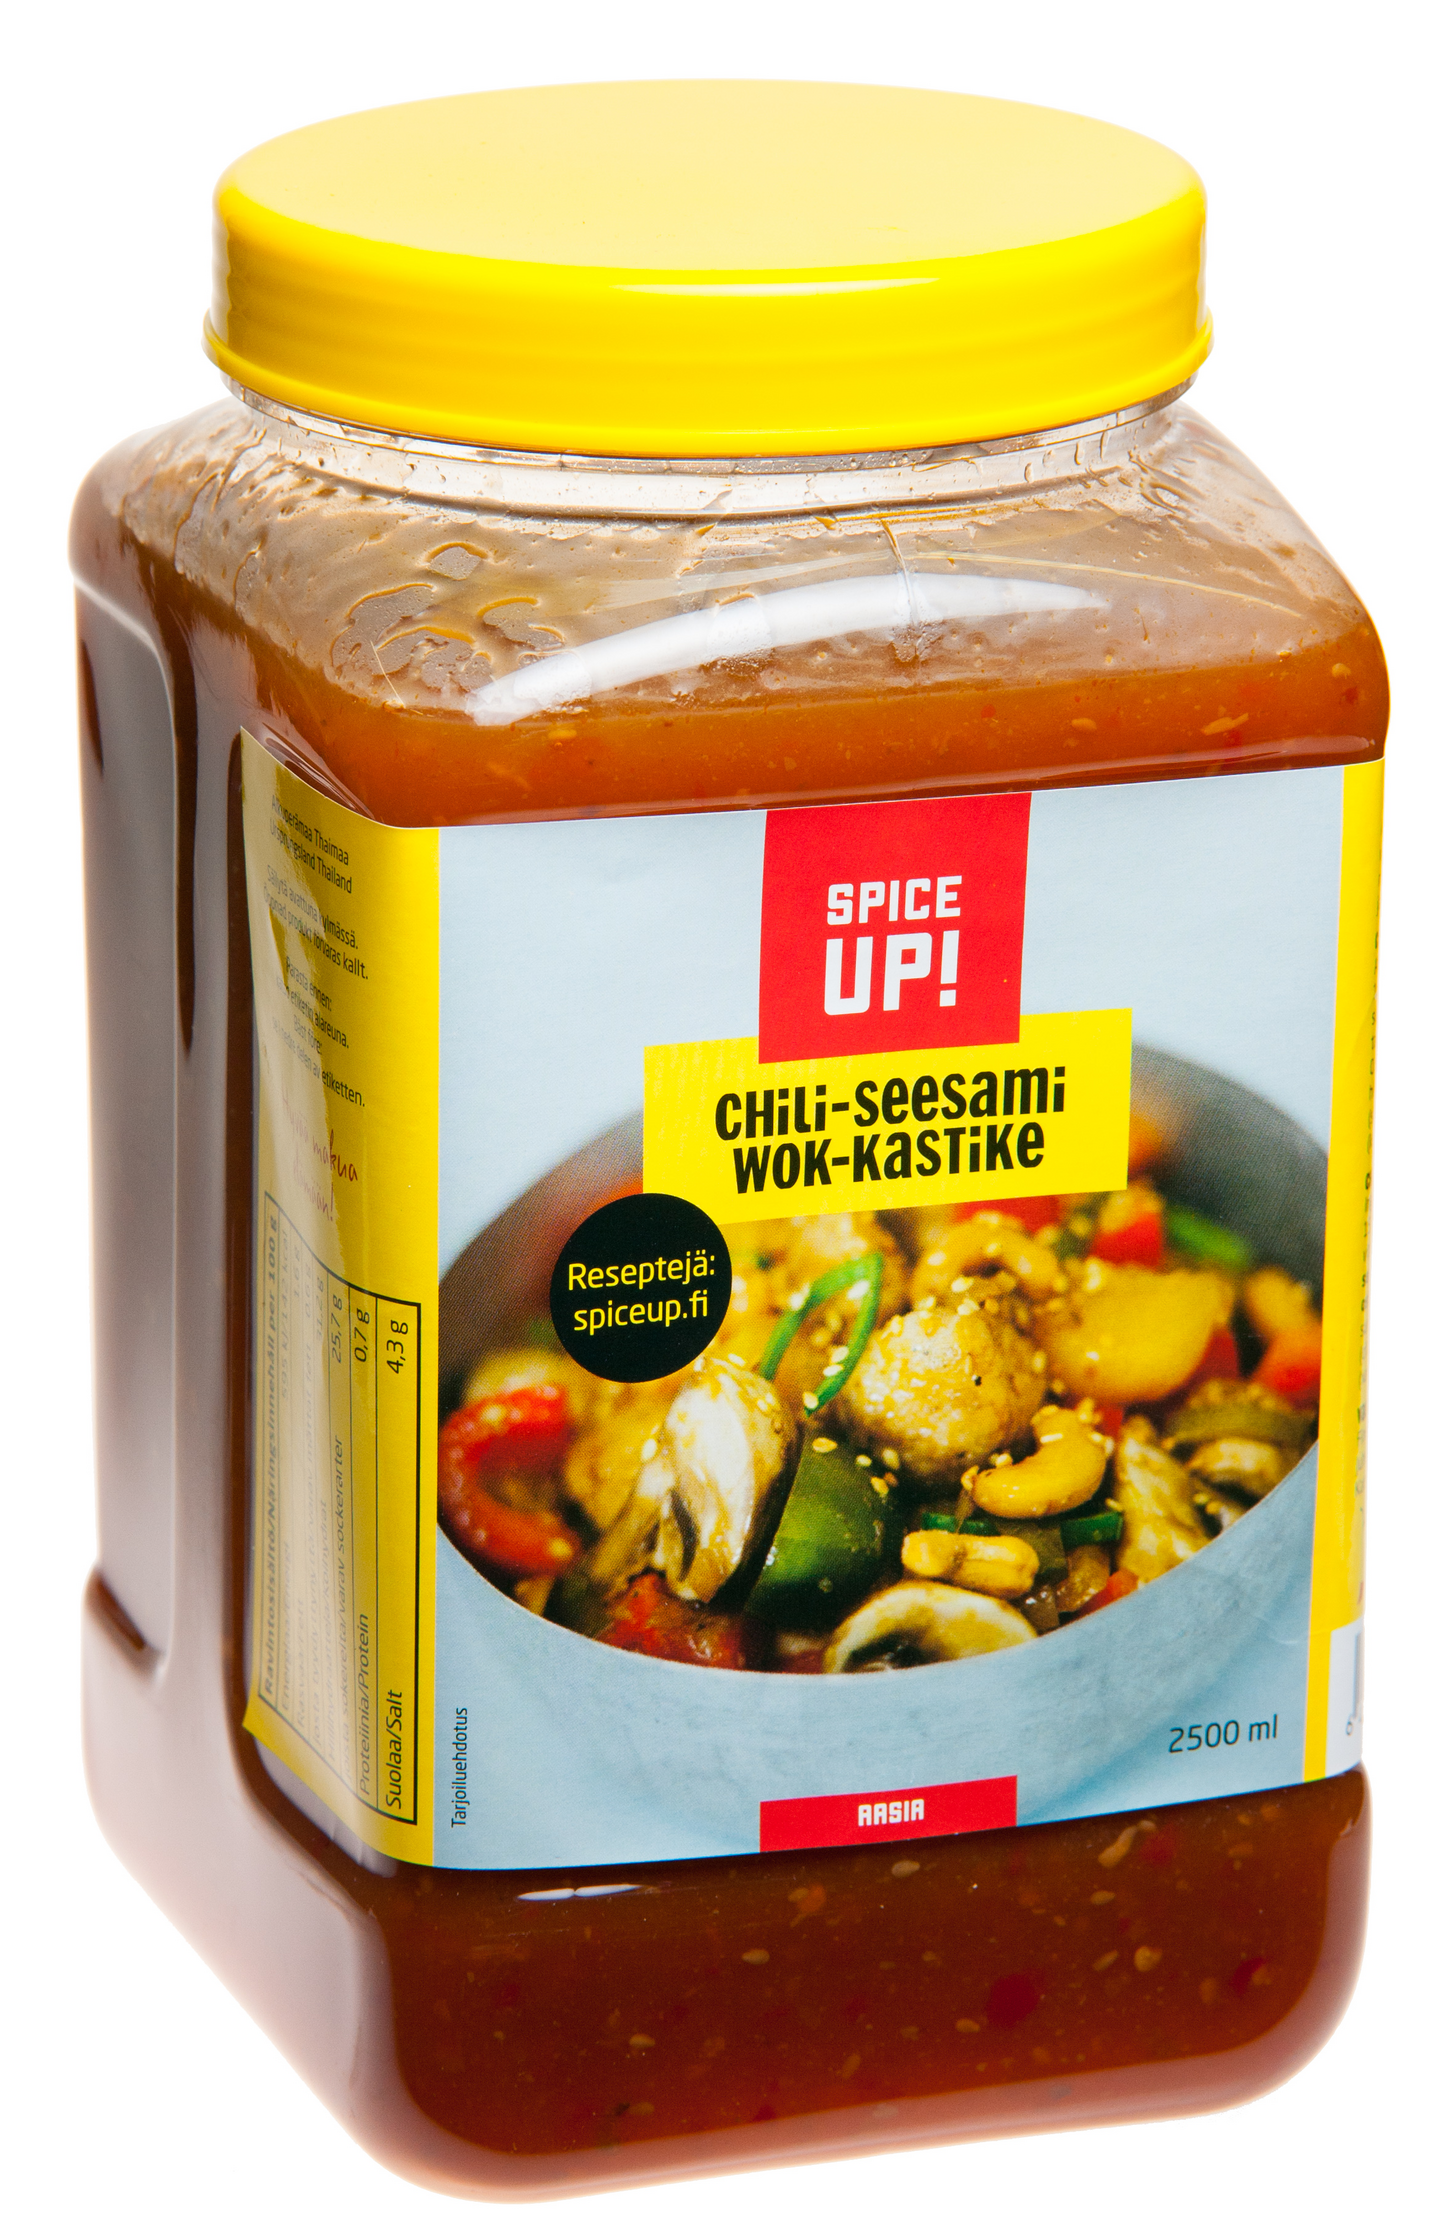 Spice Up! Wok-kastike chili-seesami mieto 2500ml